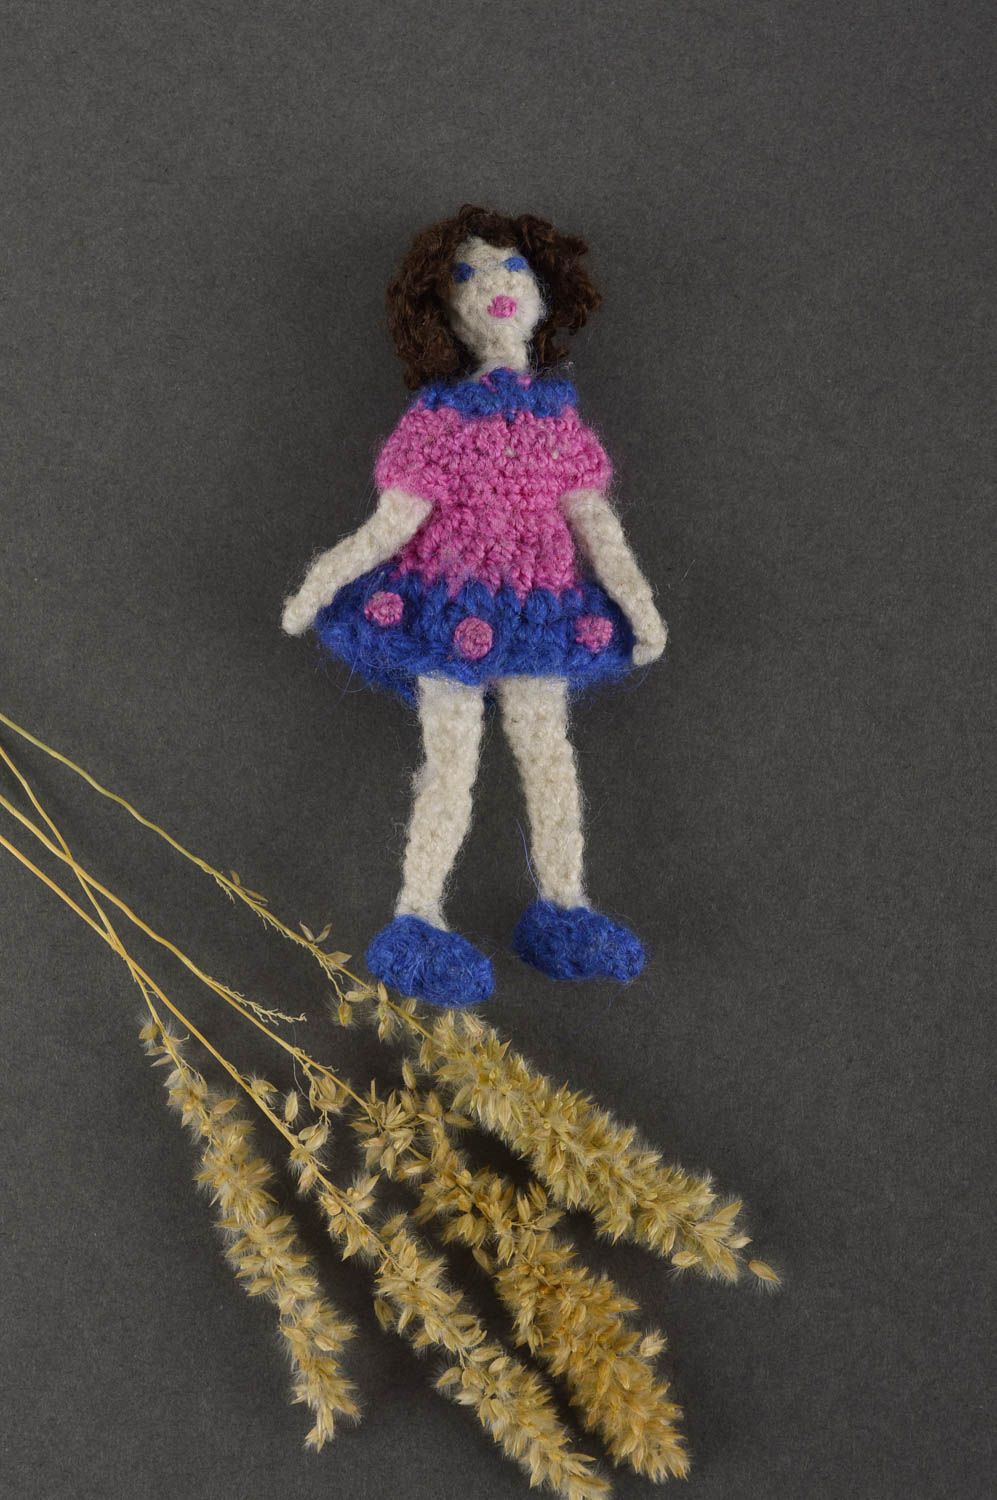  Muñeca artesanal tejida a crochet peluche para niños regalo original foto 1